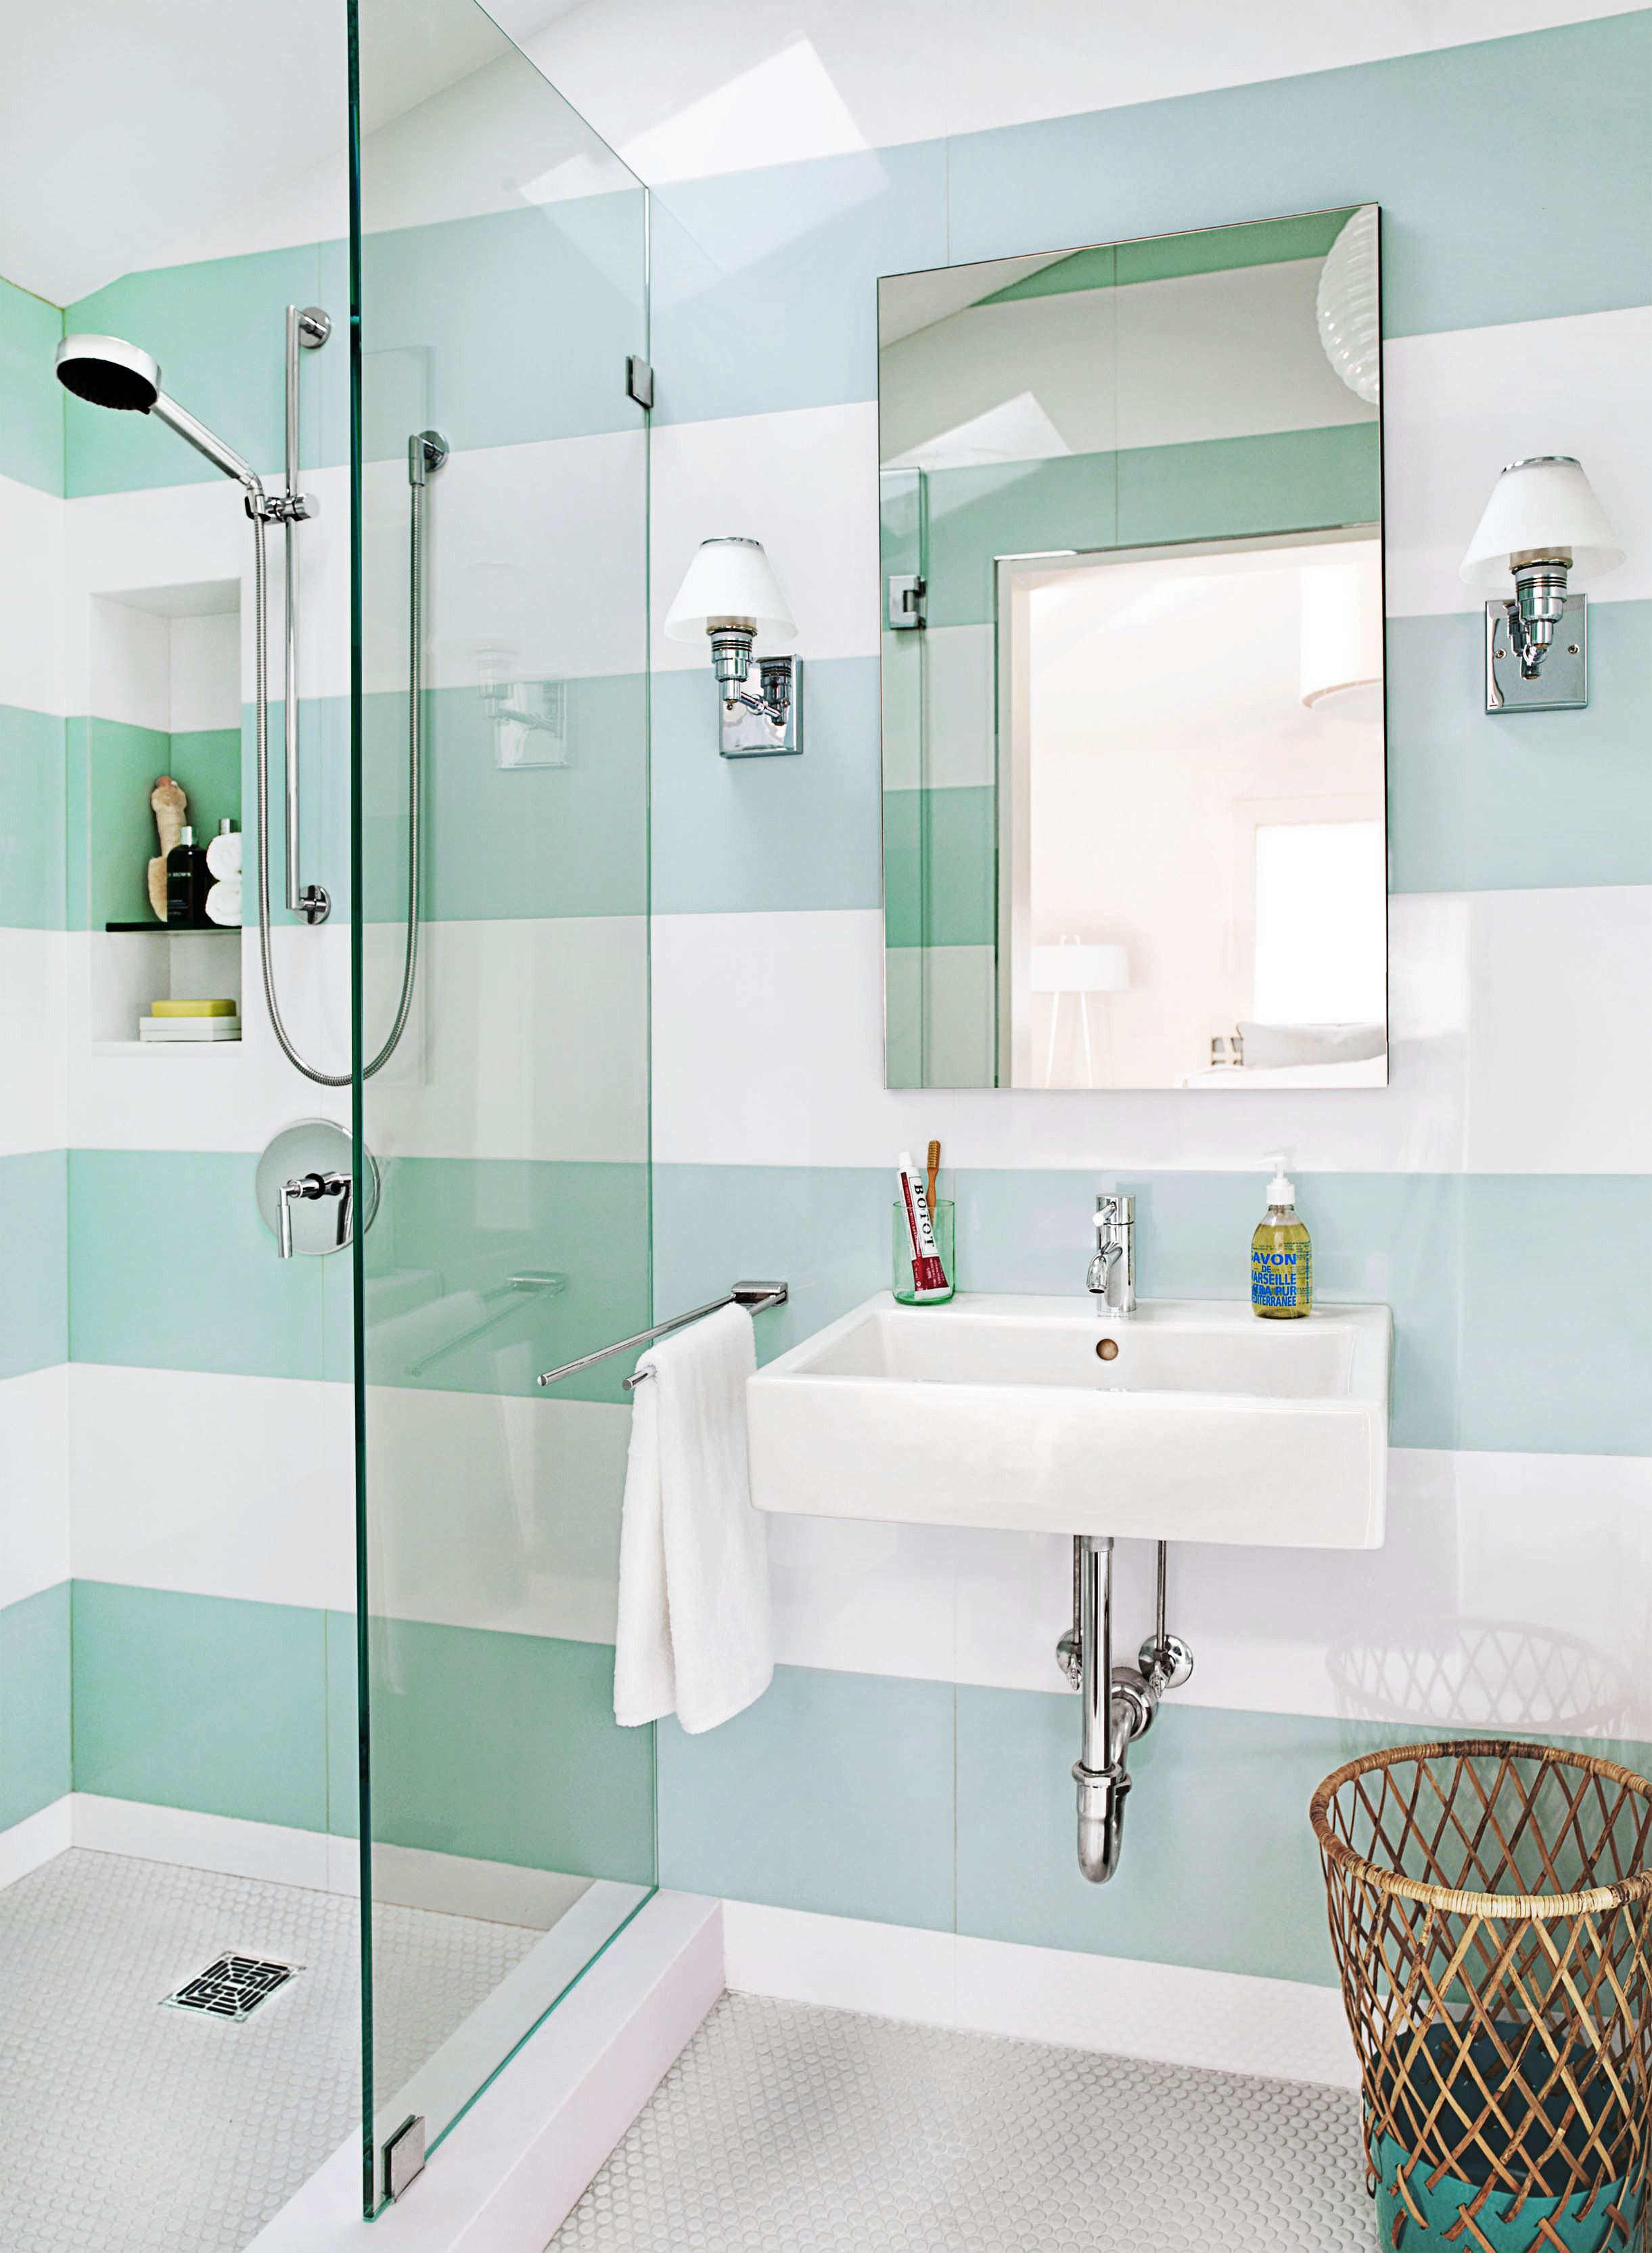 55 Bathroom Decorating Ideas Pictures Of Bathroom Decor And Designs